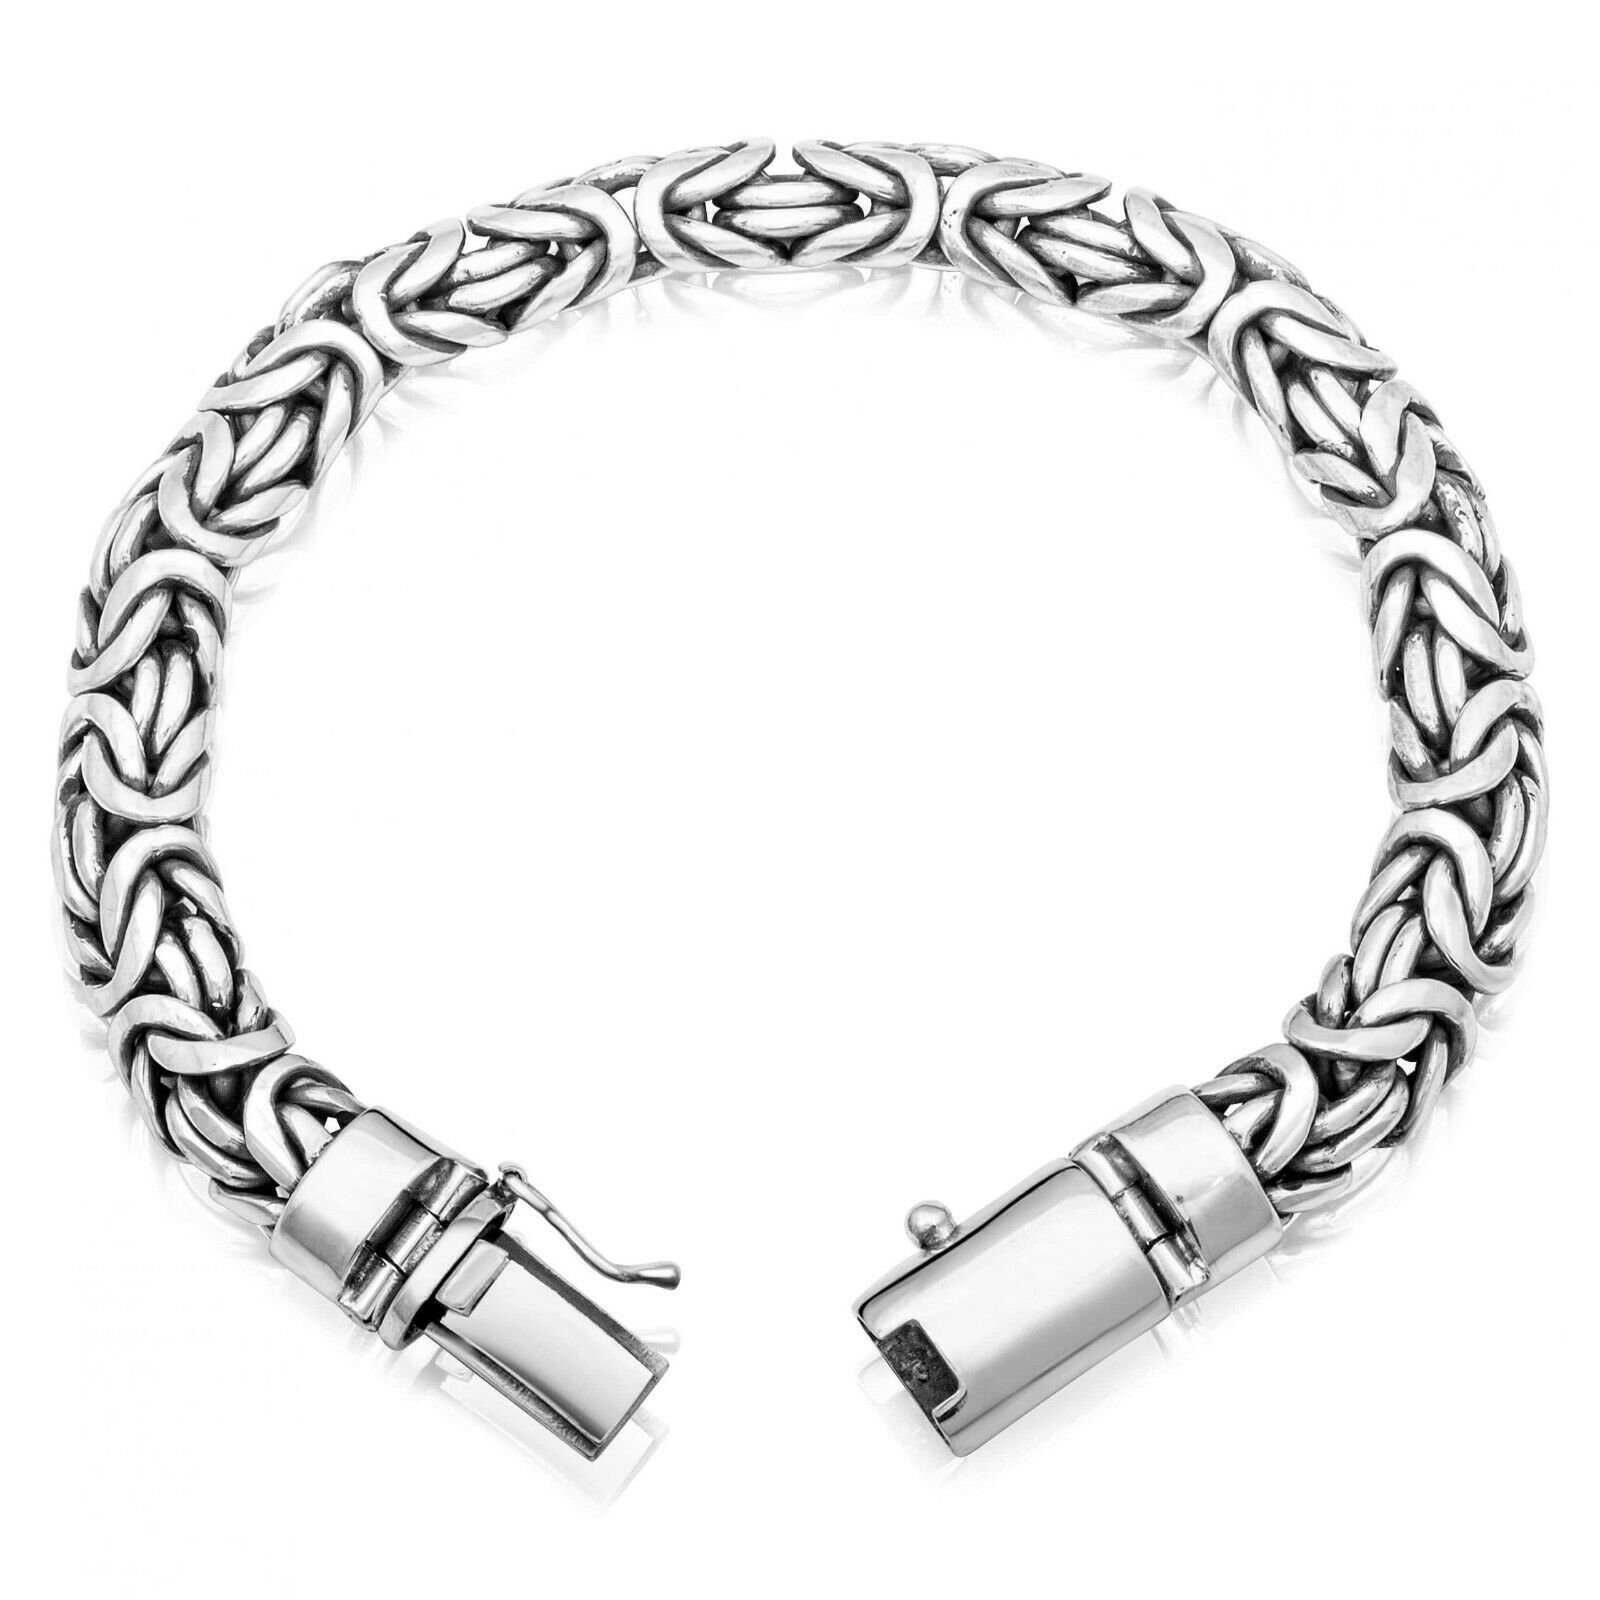 Königsarmband und Oval Tony für Massiv Fein 925er Geschwärzt, Damen Herren Silber 10mm Königsarmband